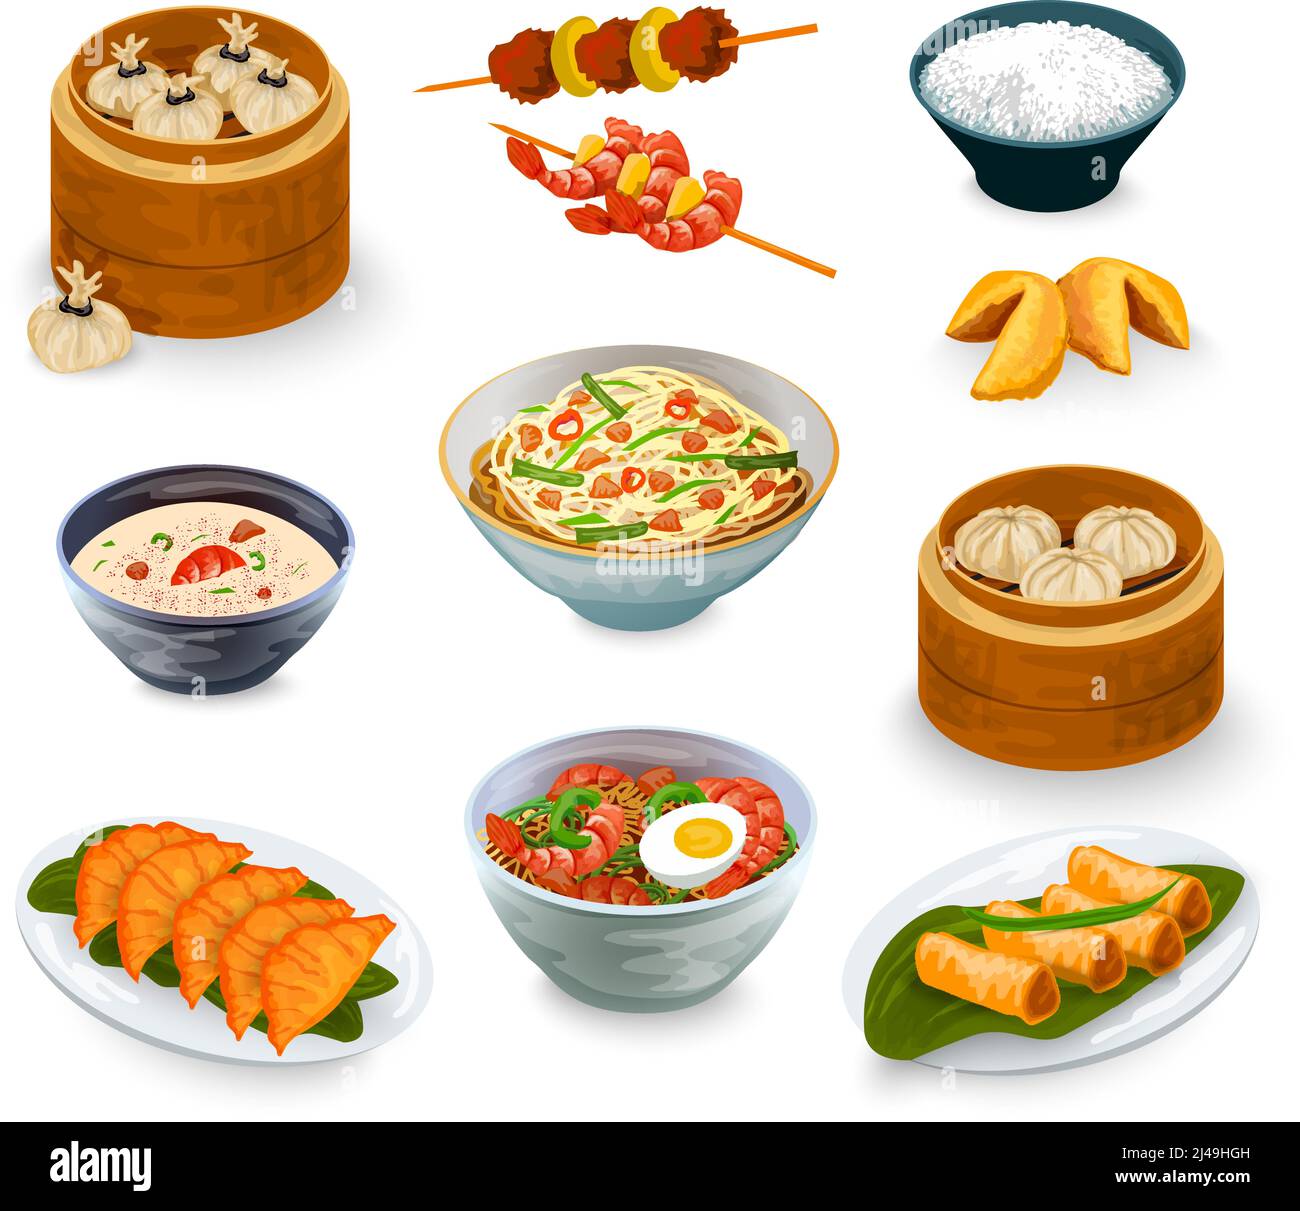 Asiatische Lebensmittel dekorative Symbole mit Glück Cookies isoliert Vektor gesetzt Abbildung Stock Vektor